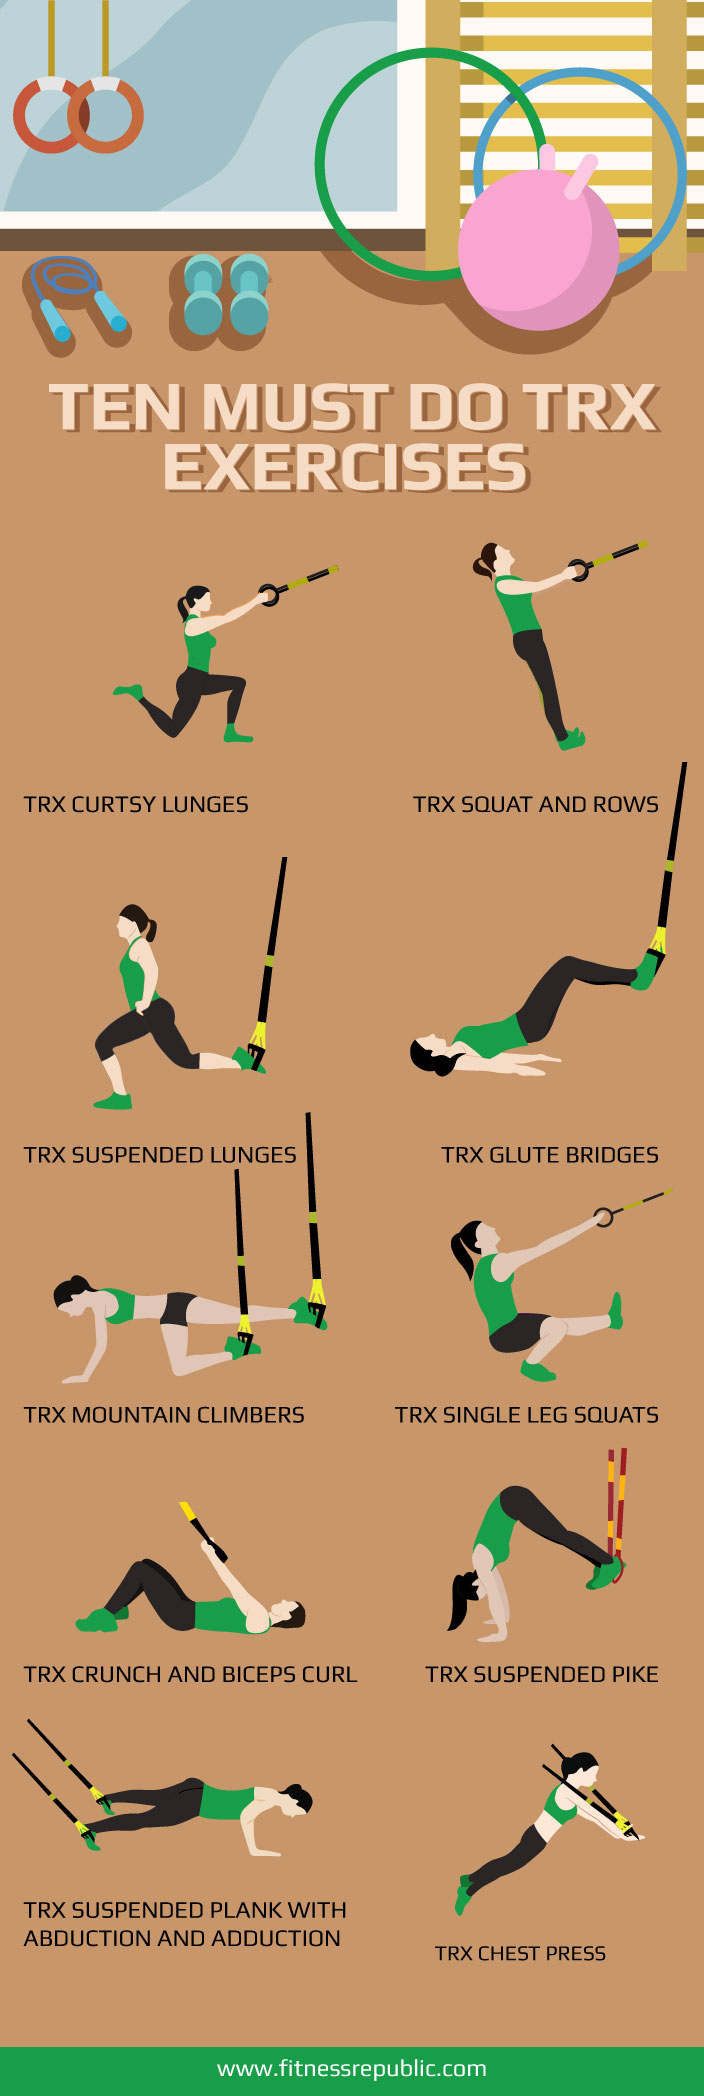 Ten Must Do TRX Exercises 